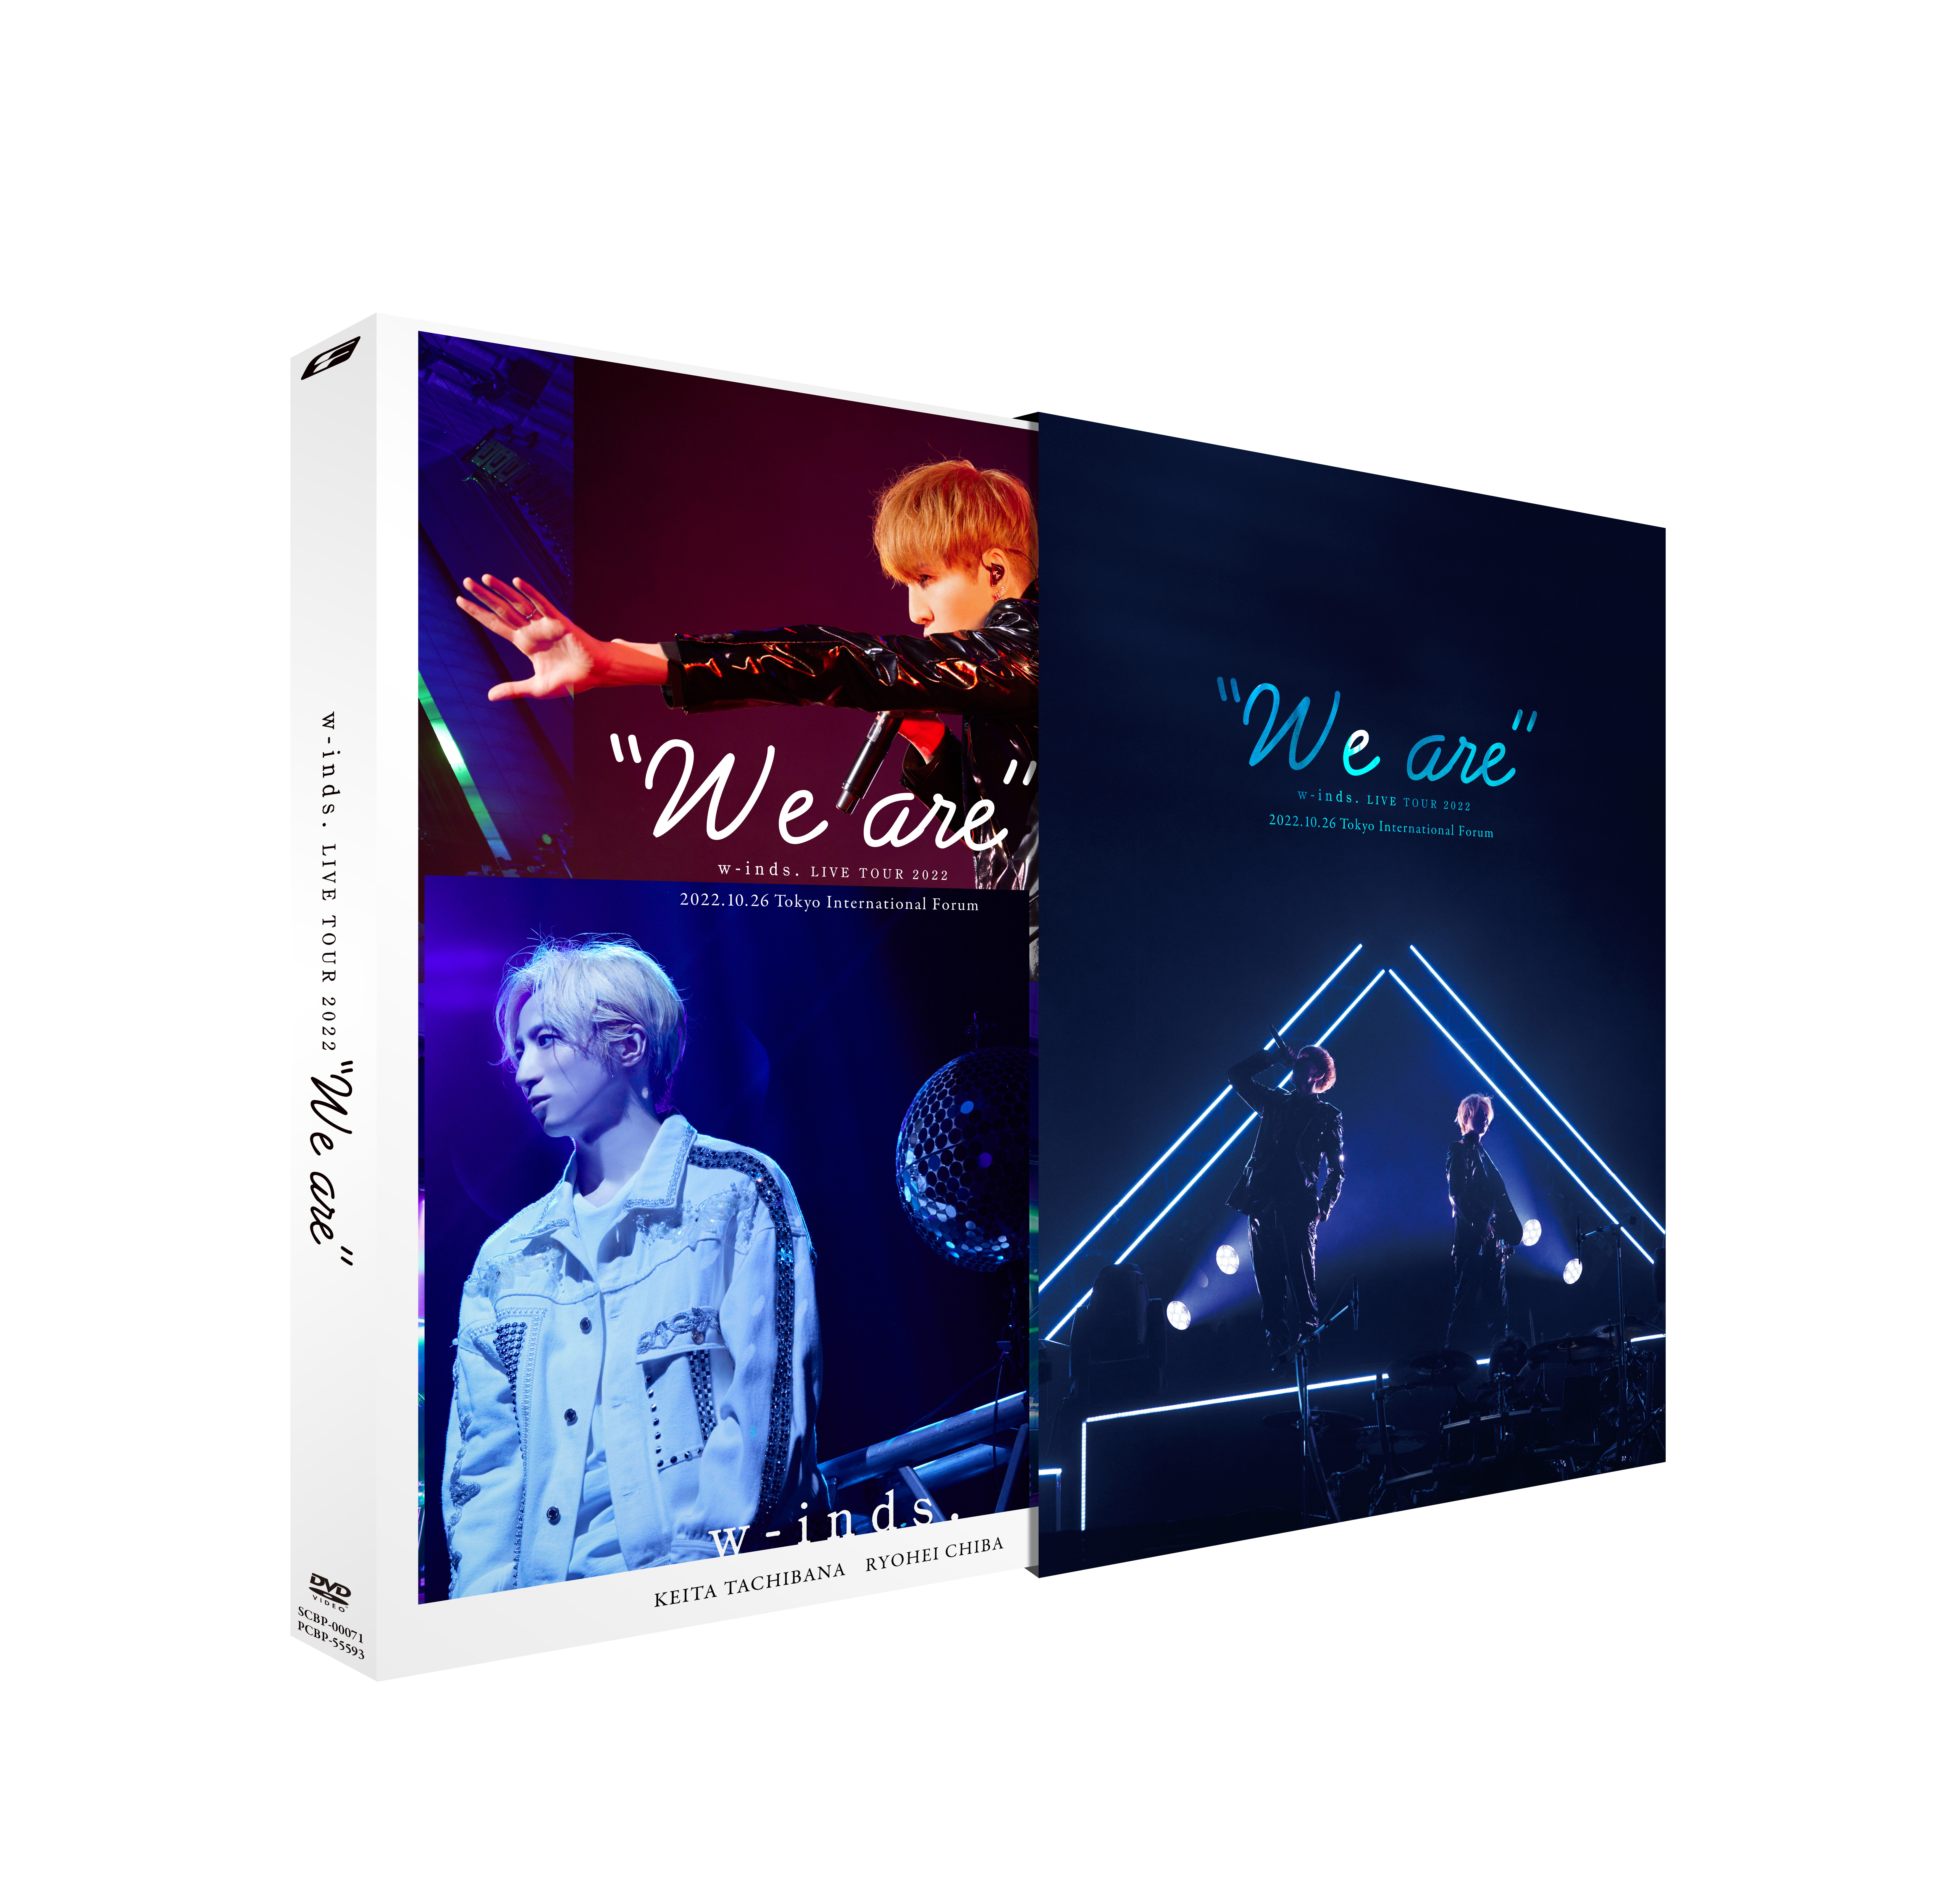 w-inds.ビデオCD・DVD・ブルーレイ